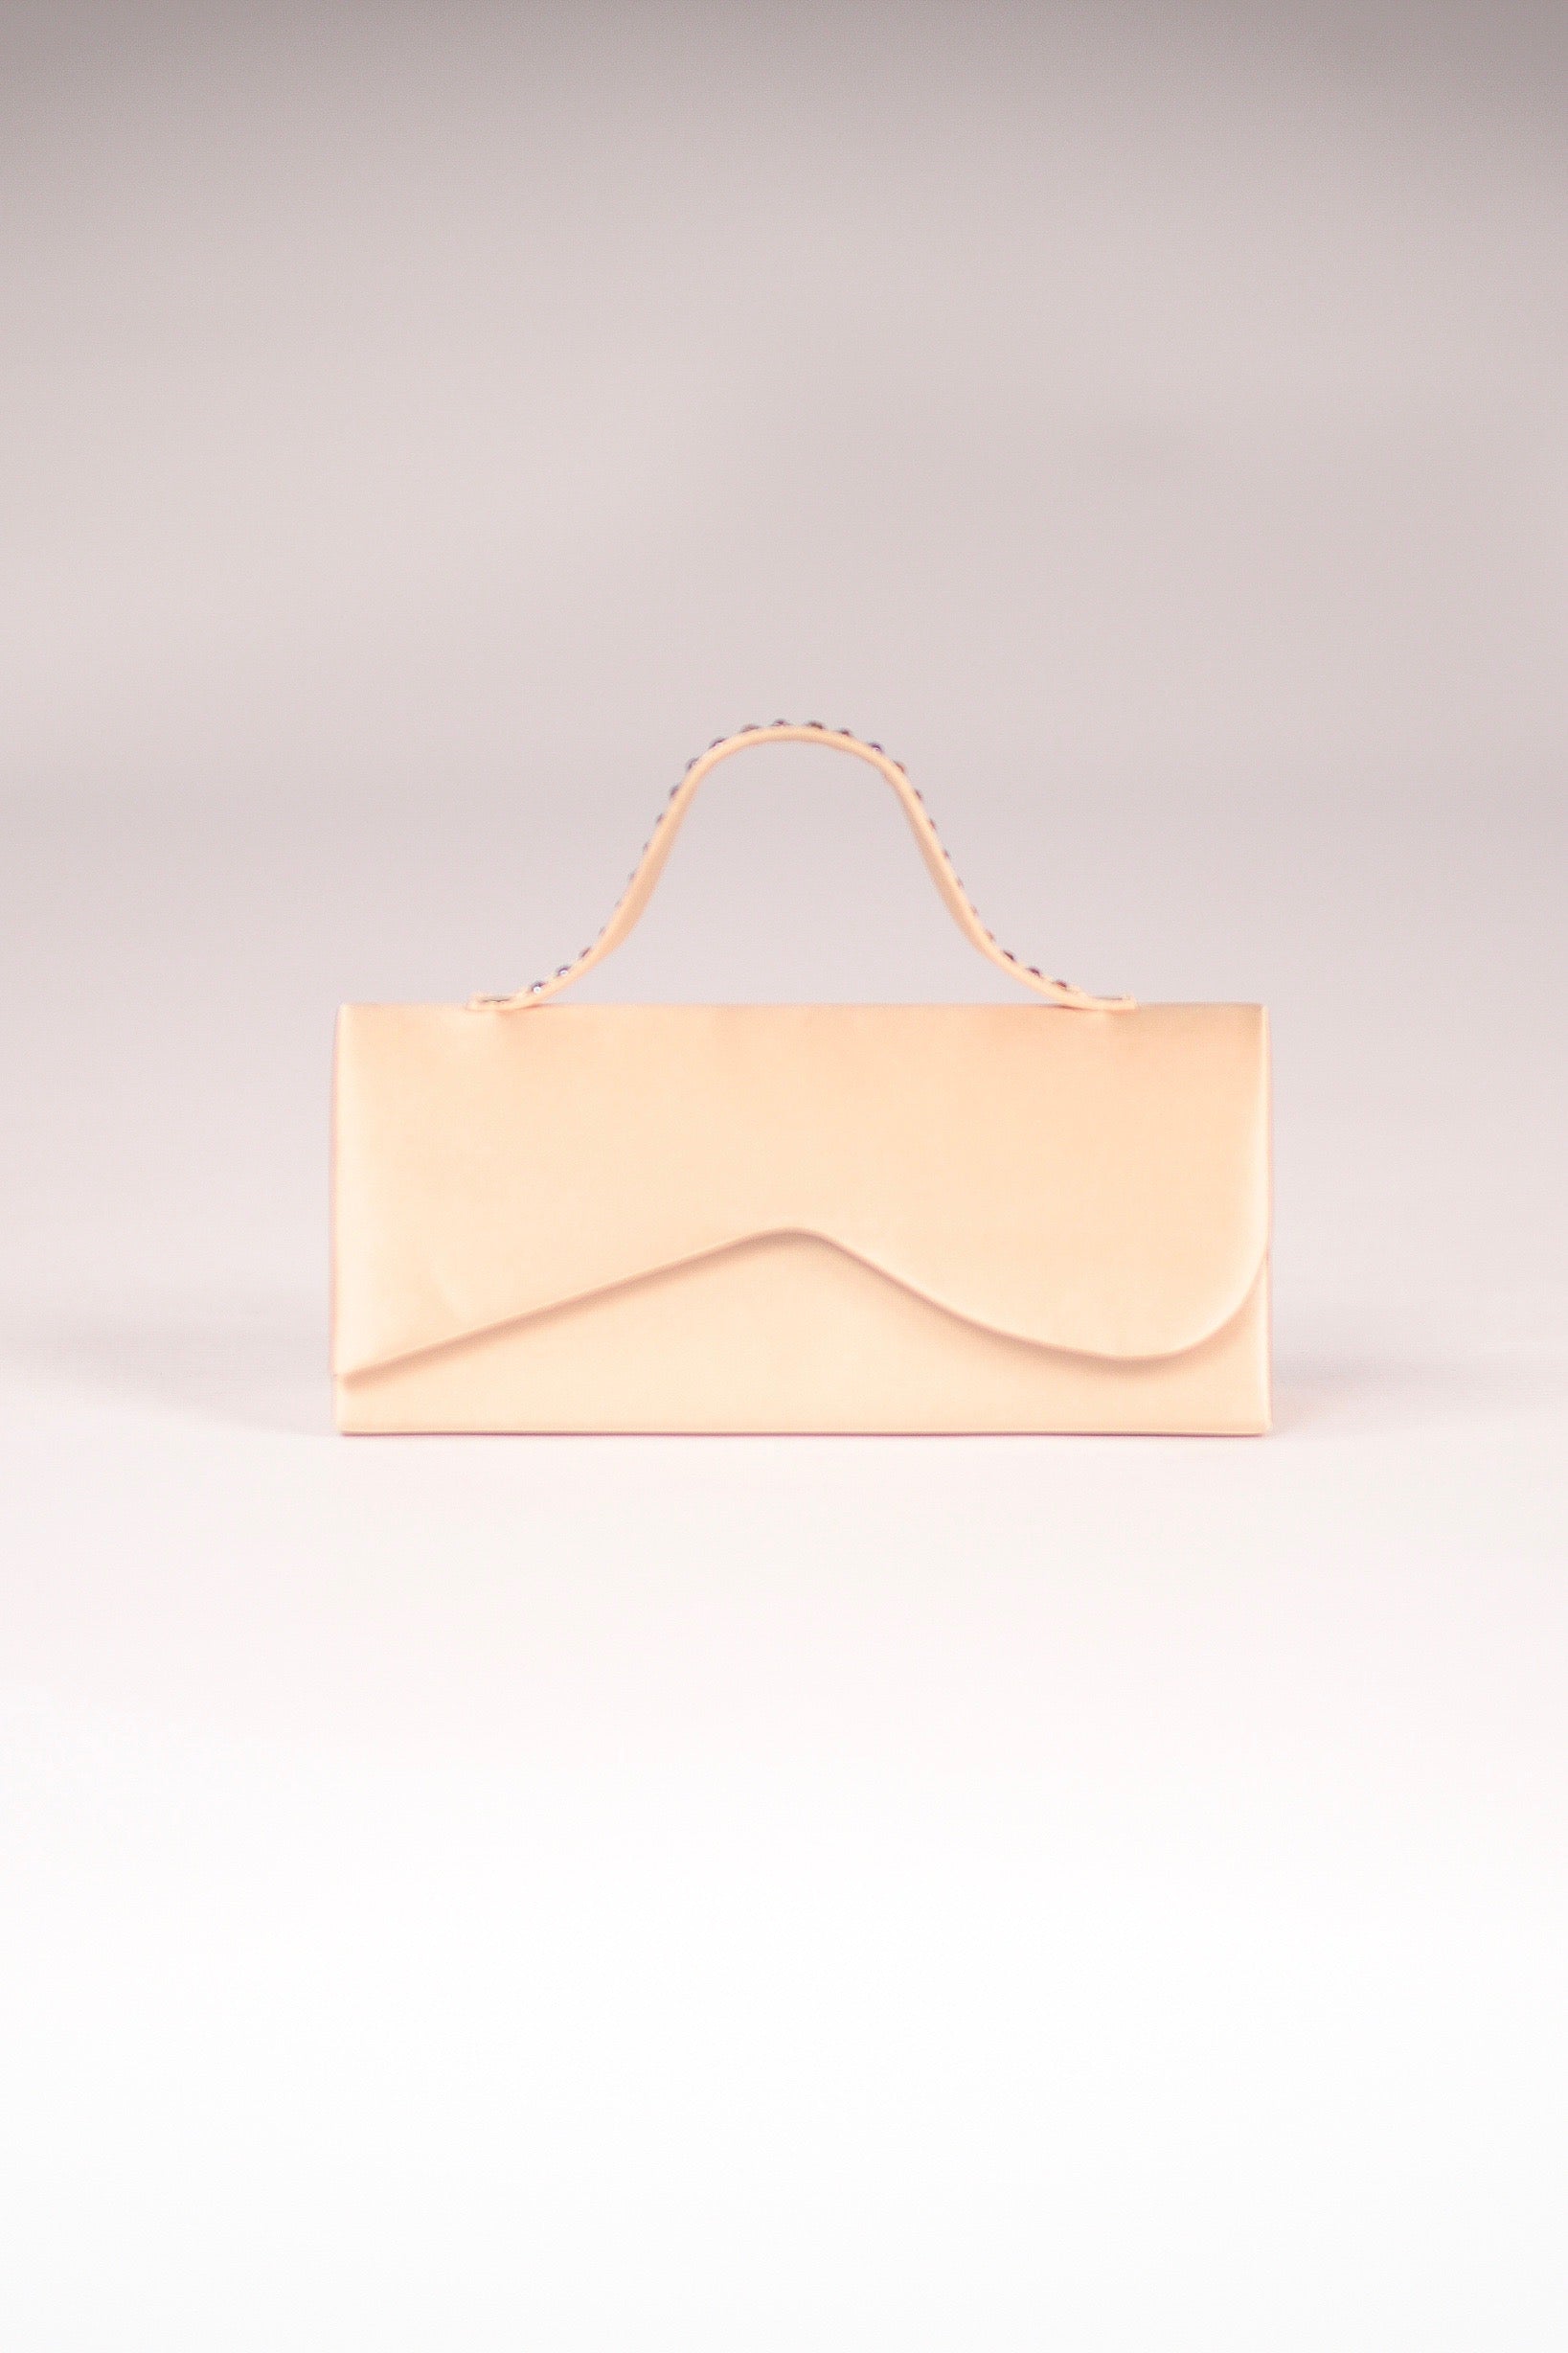 How To Rent A Chanel Bag? | Bragmybag